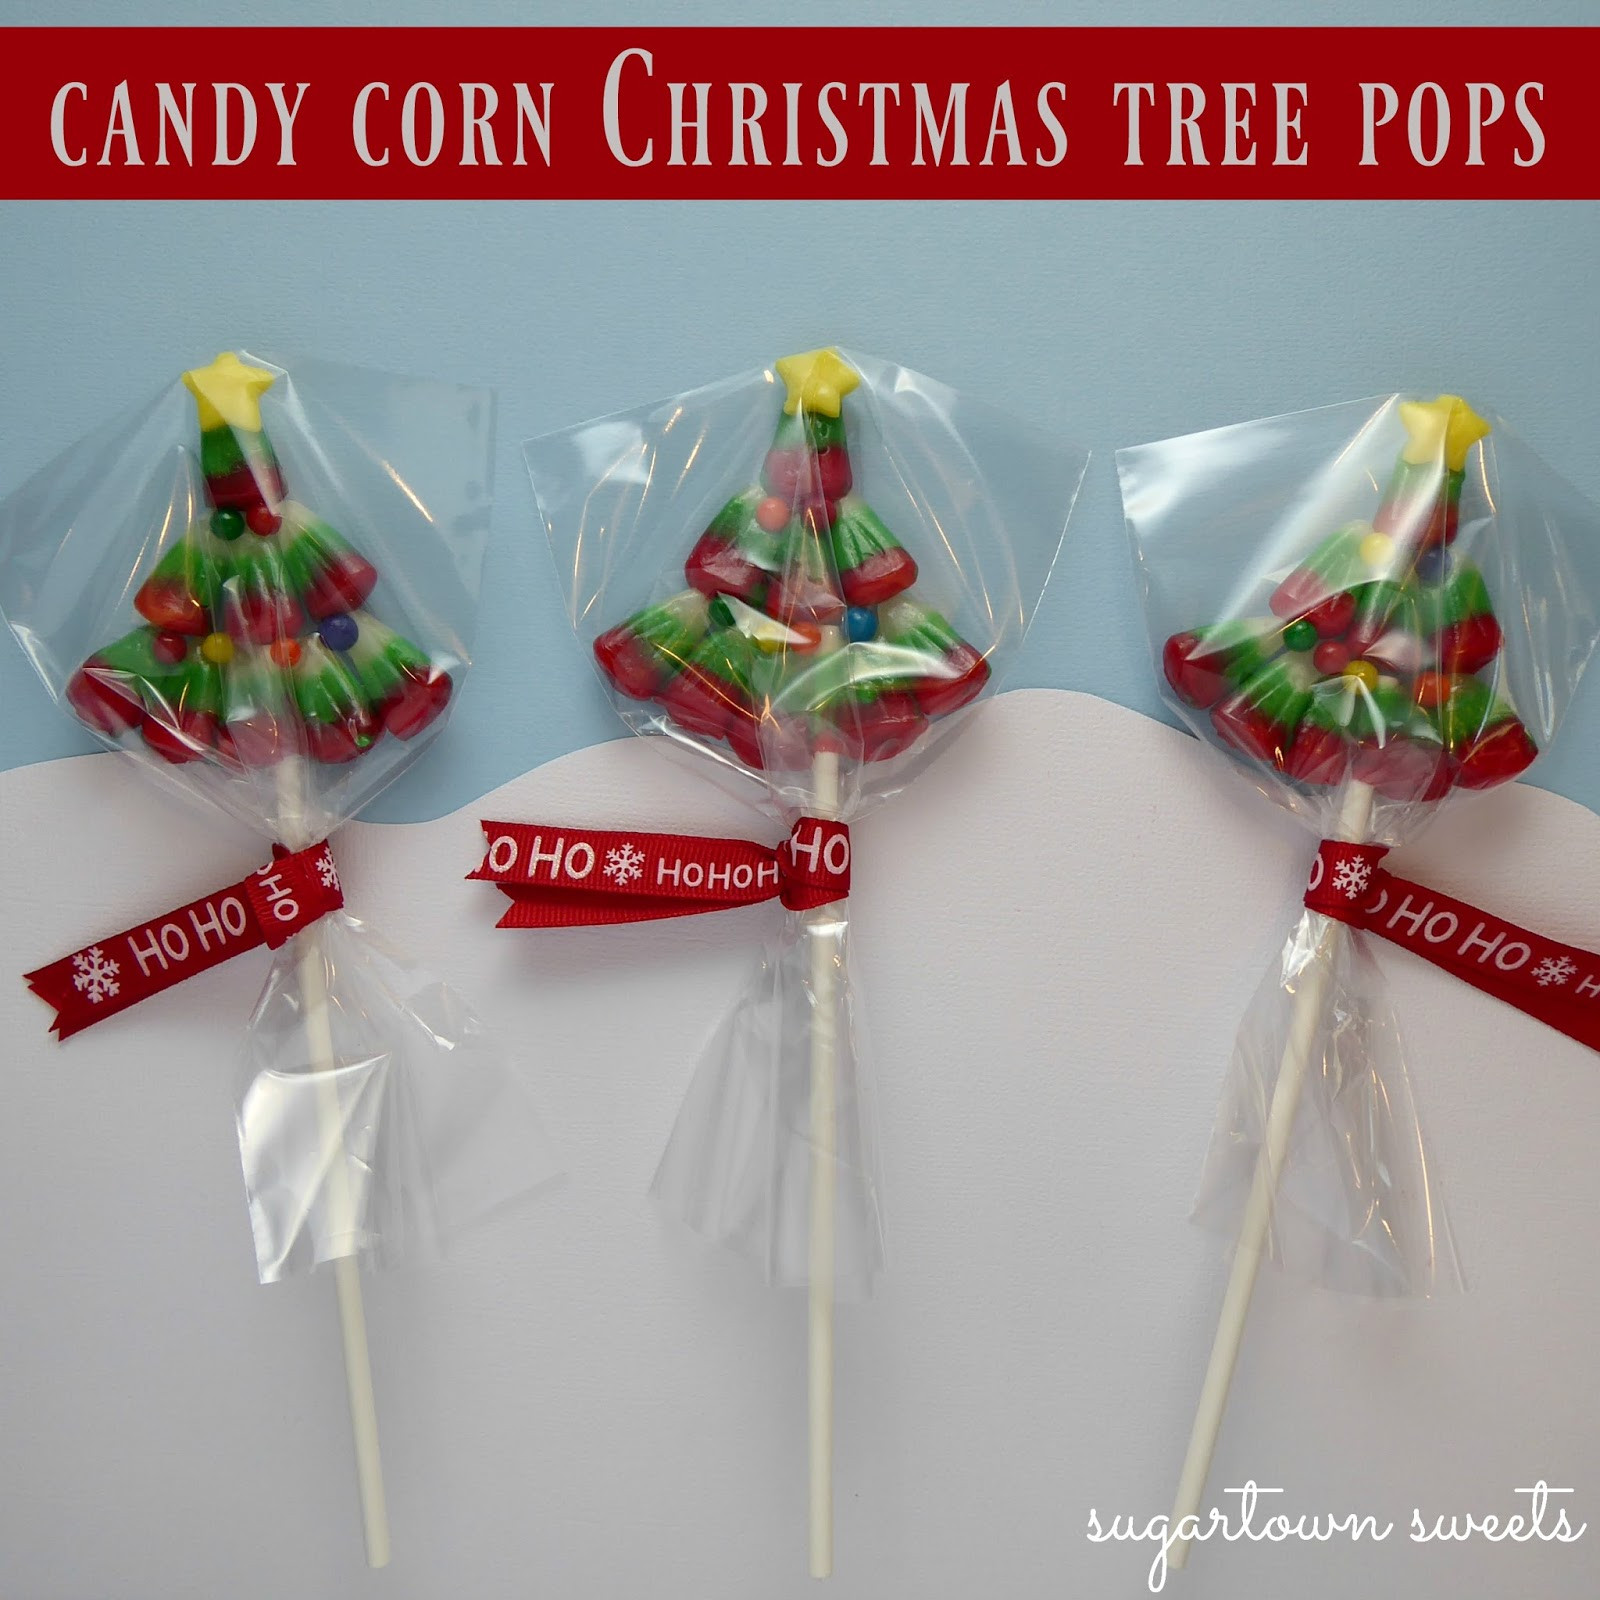 Candy Corn Christmas Tree
 Sugartown Sweets Candy Corn Christmas Tree Pops